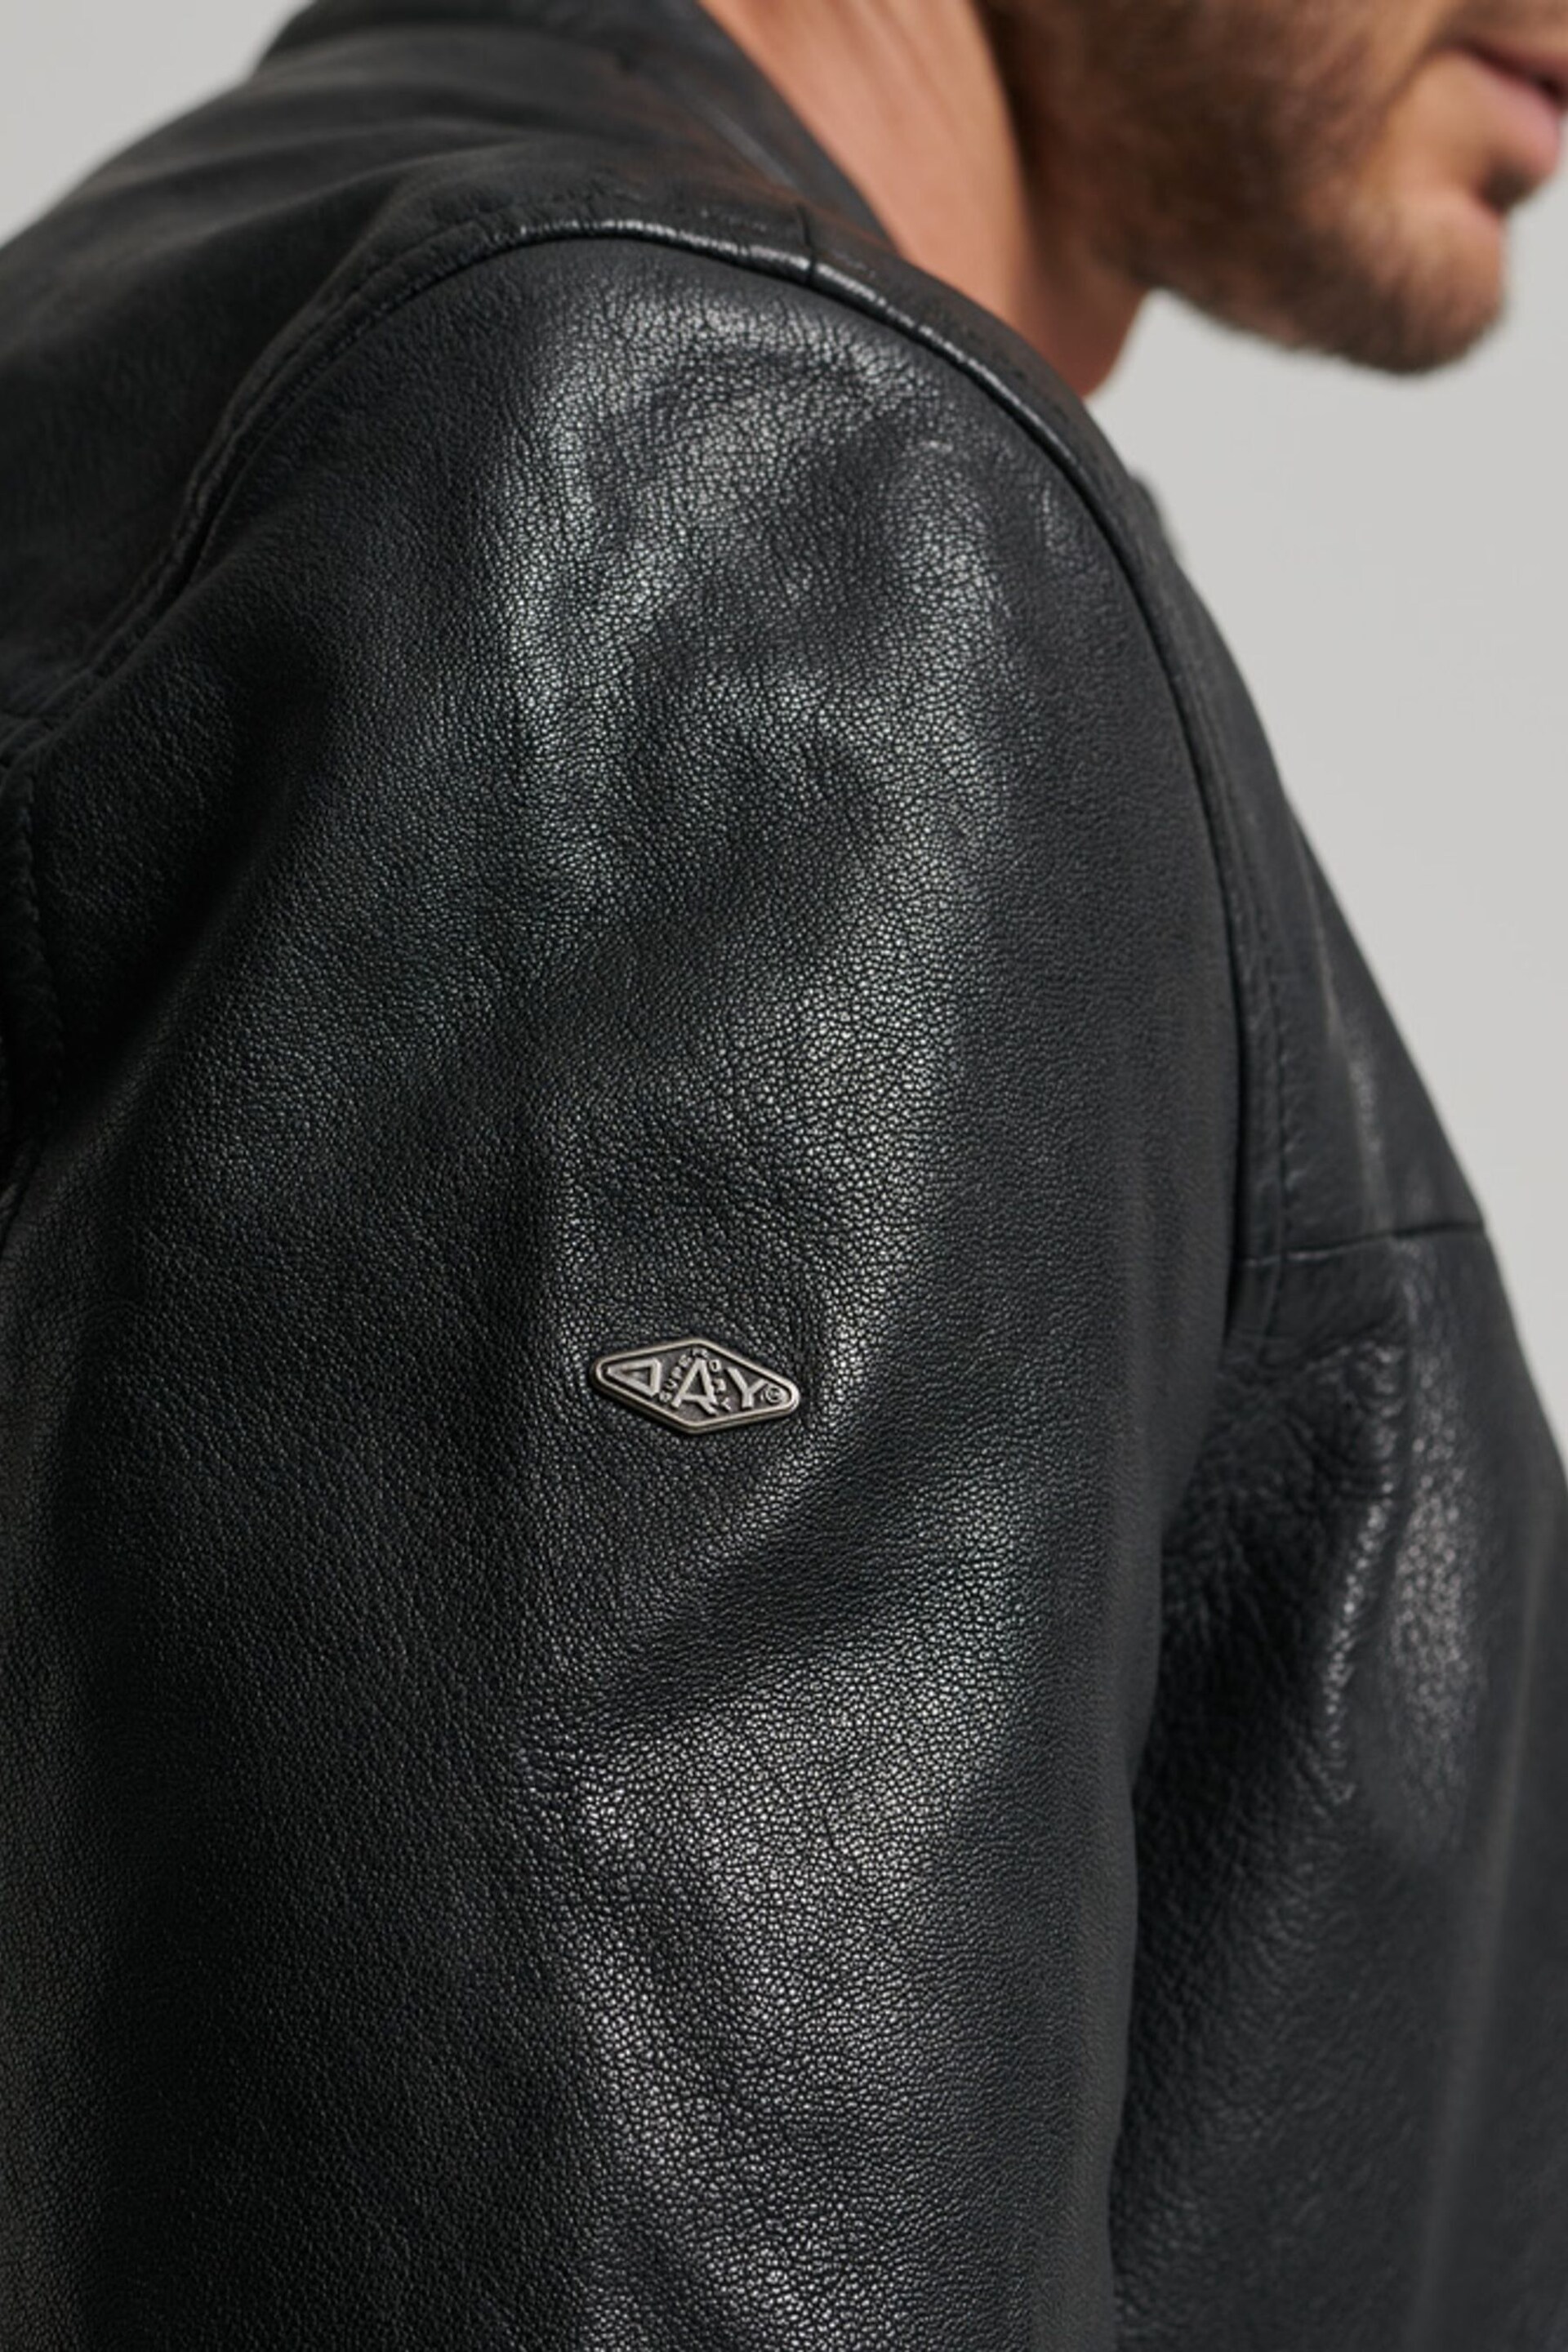 Superdry Black Heritage Leather Sports Racer Jacket - Image 6 of 8